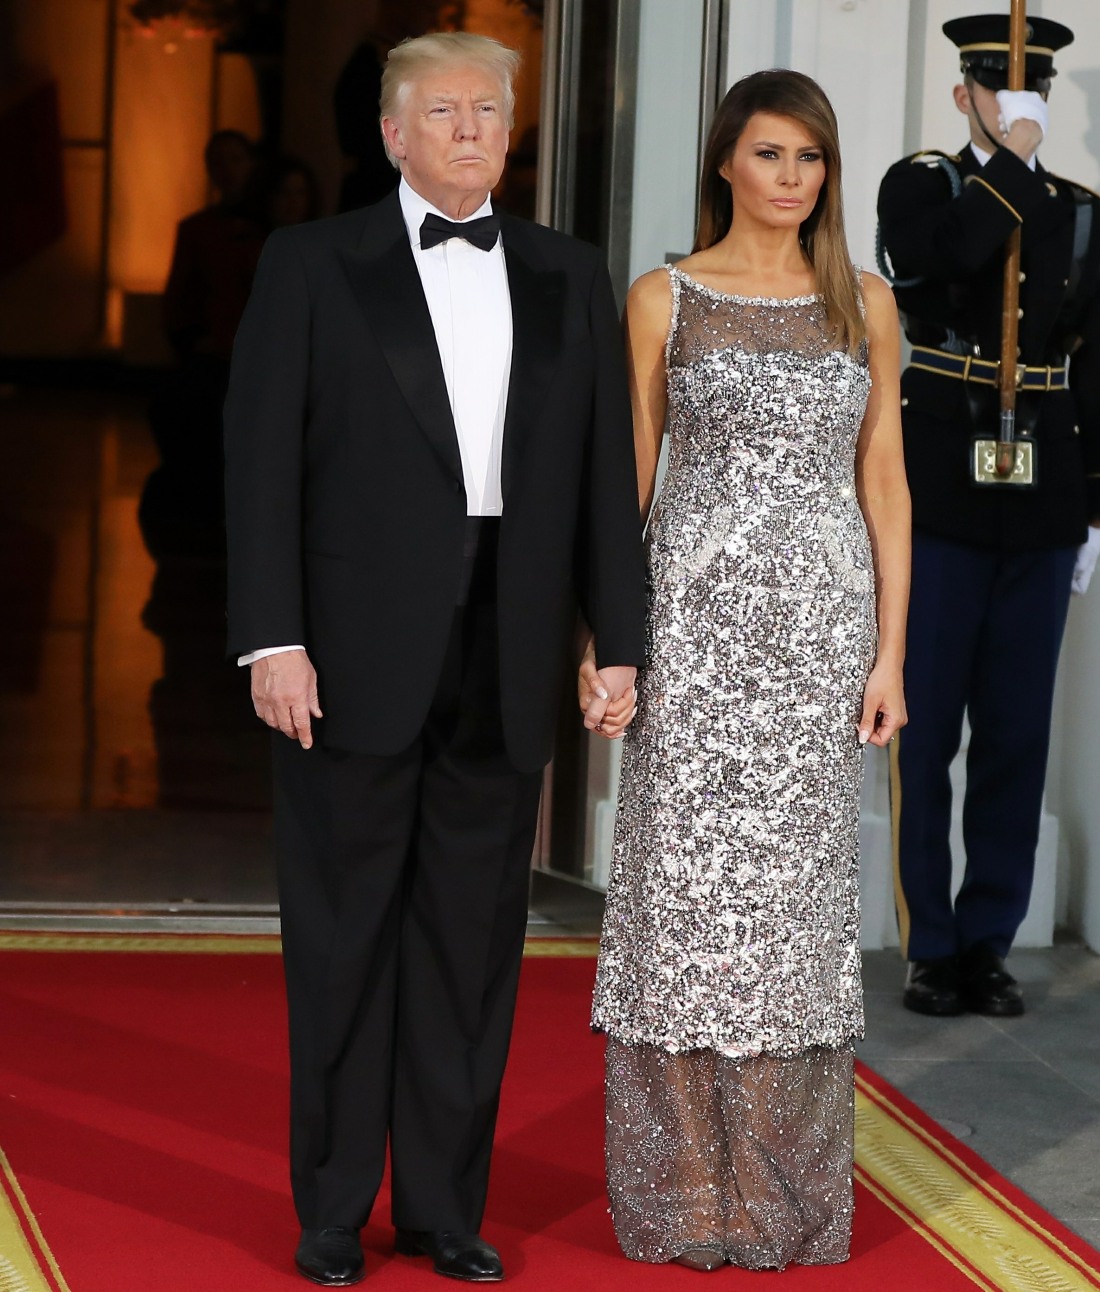 Donald Trump, Melania Trump, Emmanuel Macron, and Brigitte Macron attend a dinner at the White House